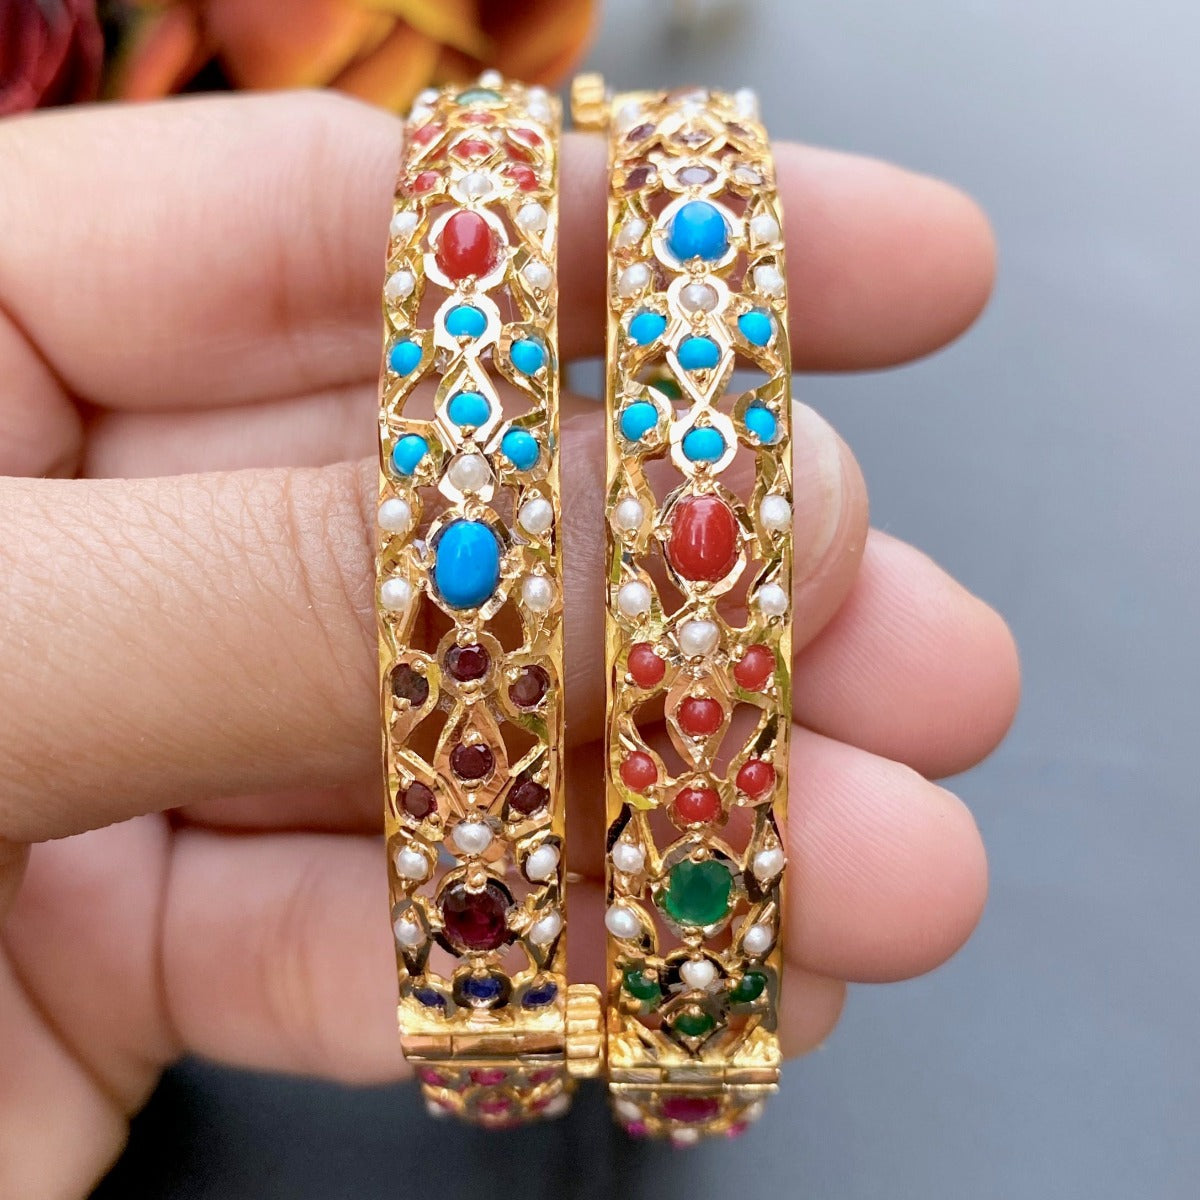 22ct gold bangles with navratna stones